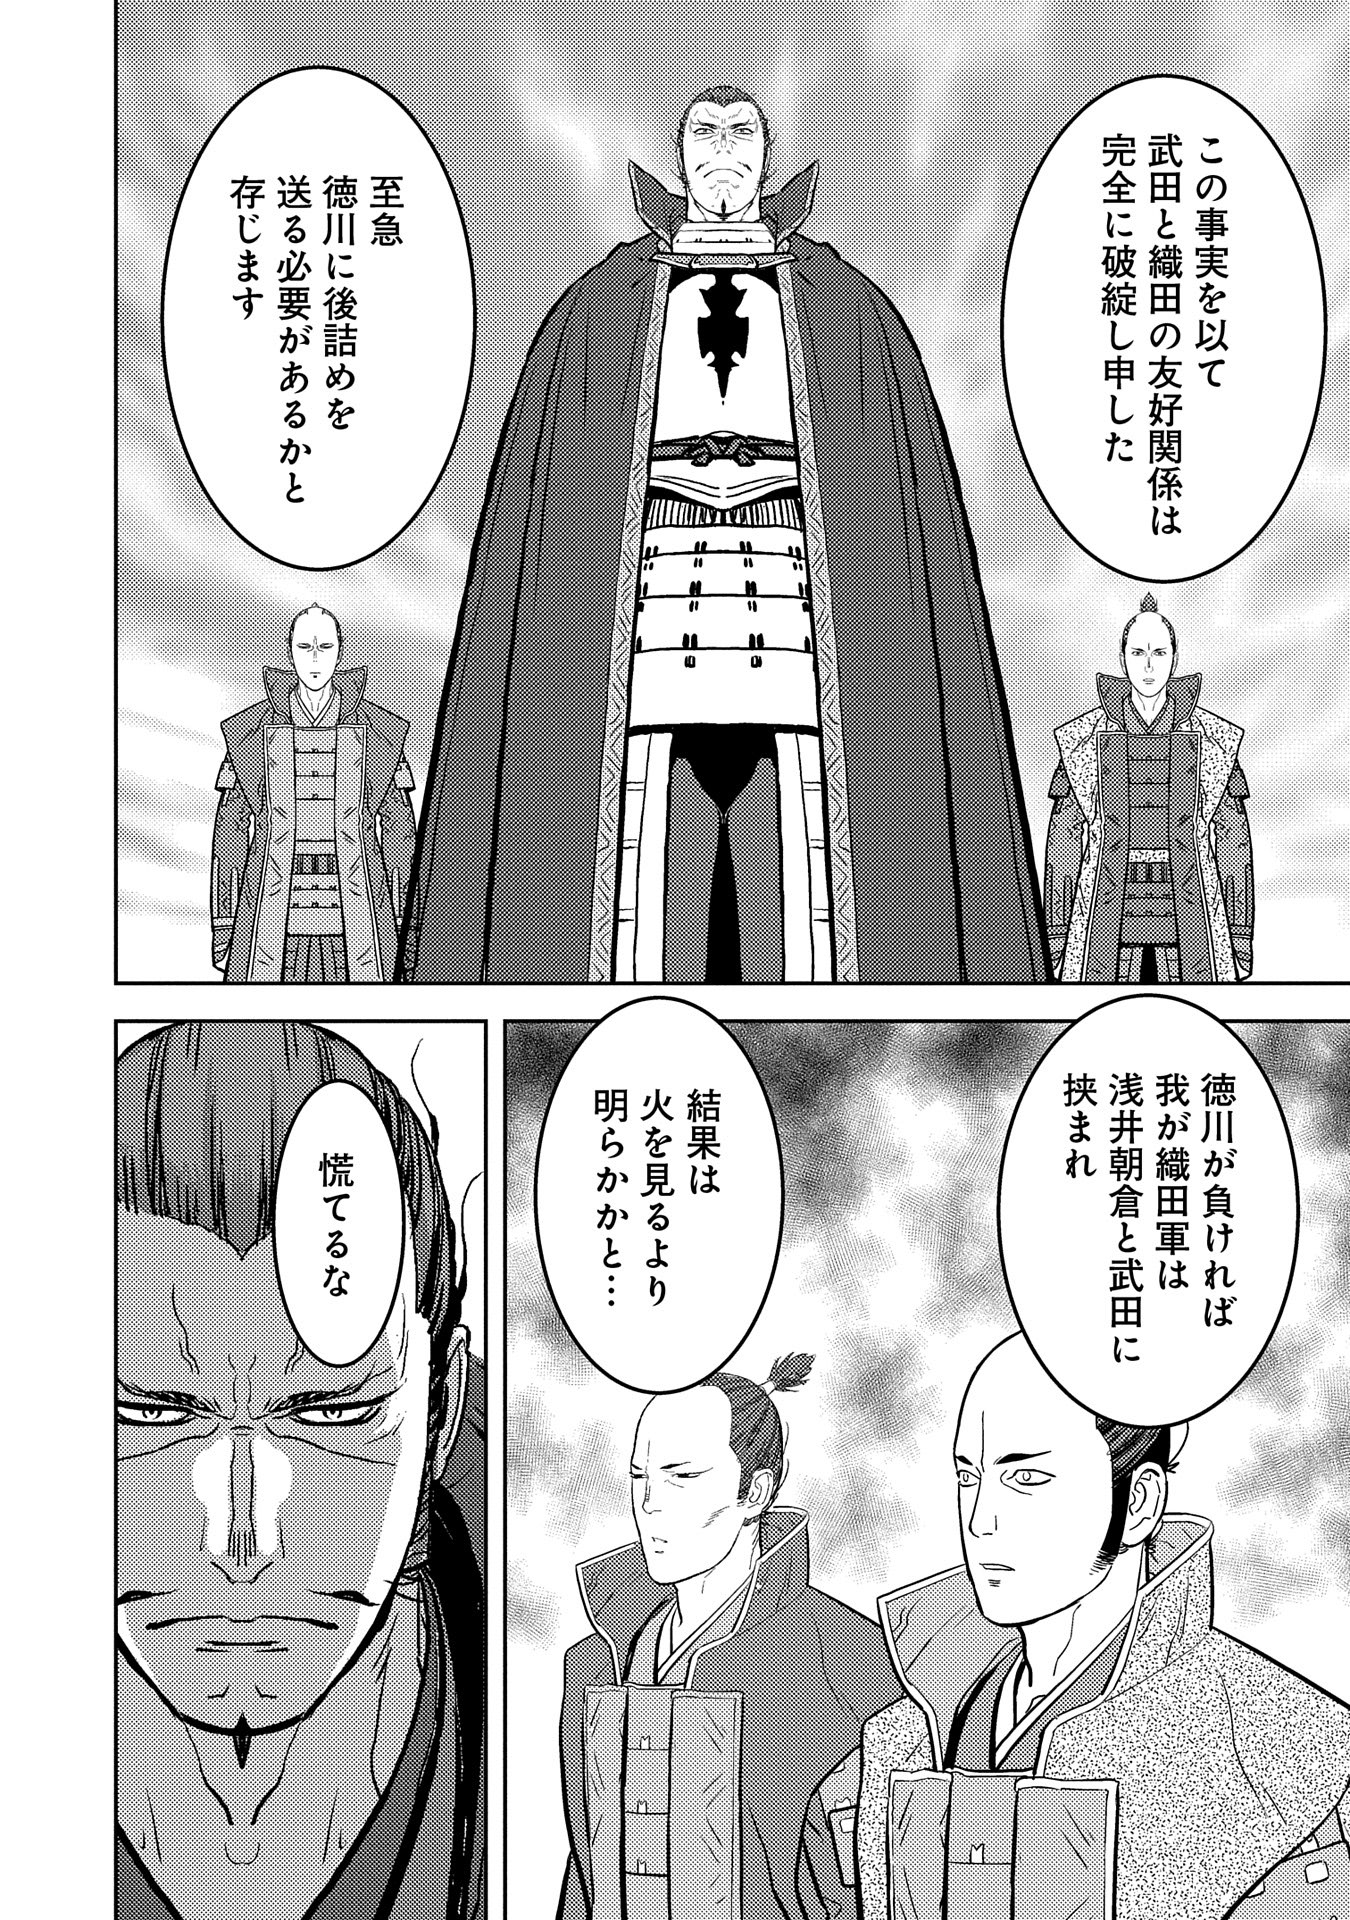 Sengoku Komachi Kuroutan - Chapter 79 - Page 6